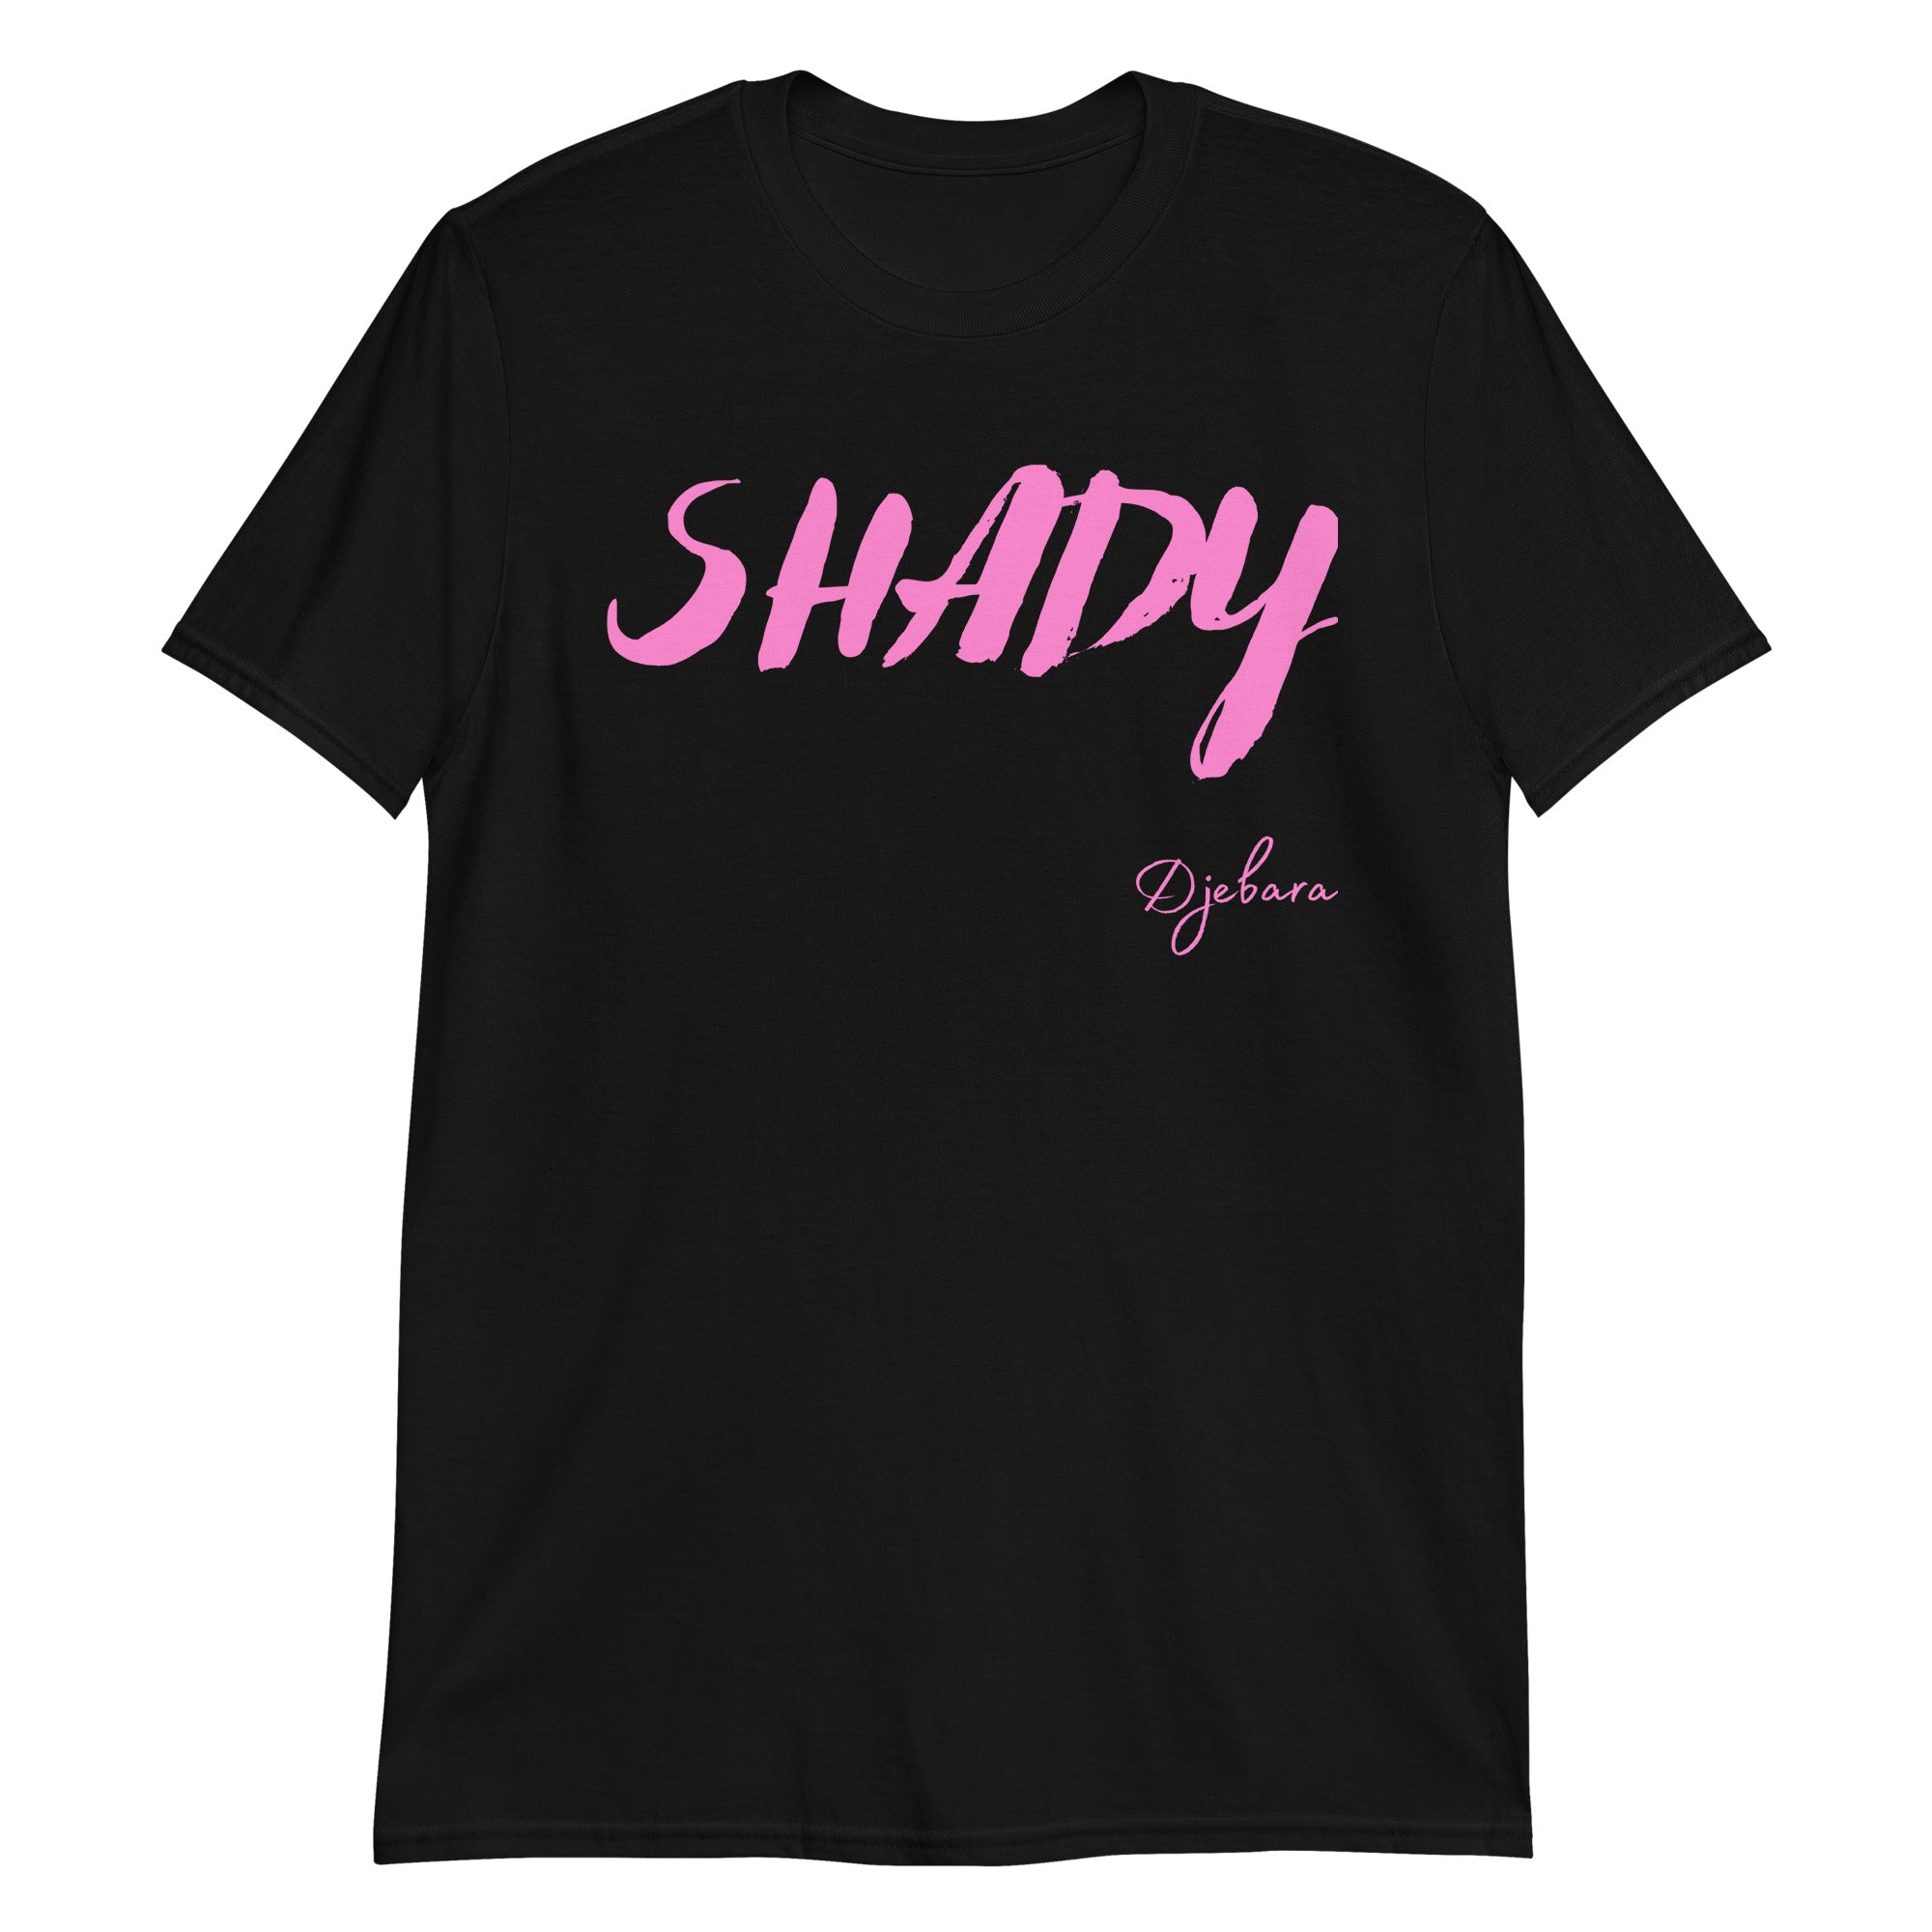 Black SHADY Short-Sleeve Gildan Unisex T-Shirt (Pink) S-3XL